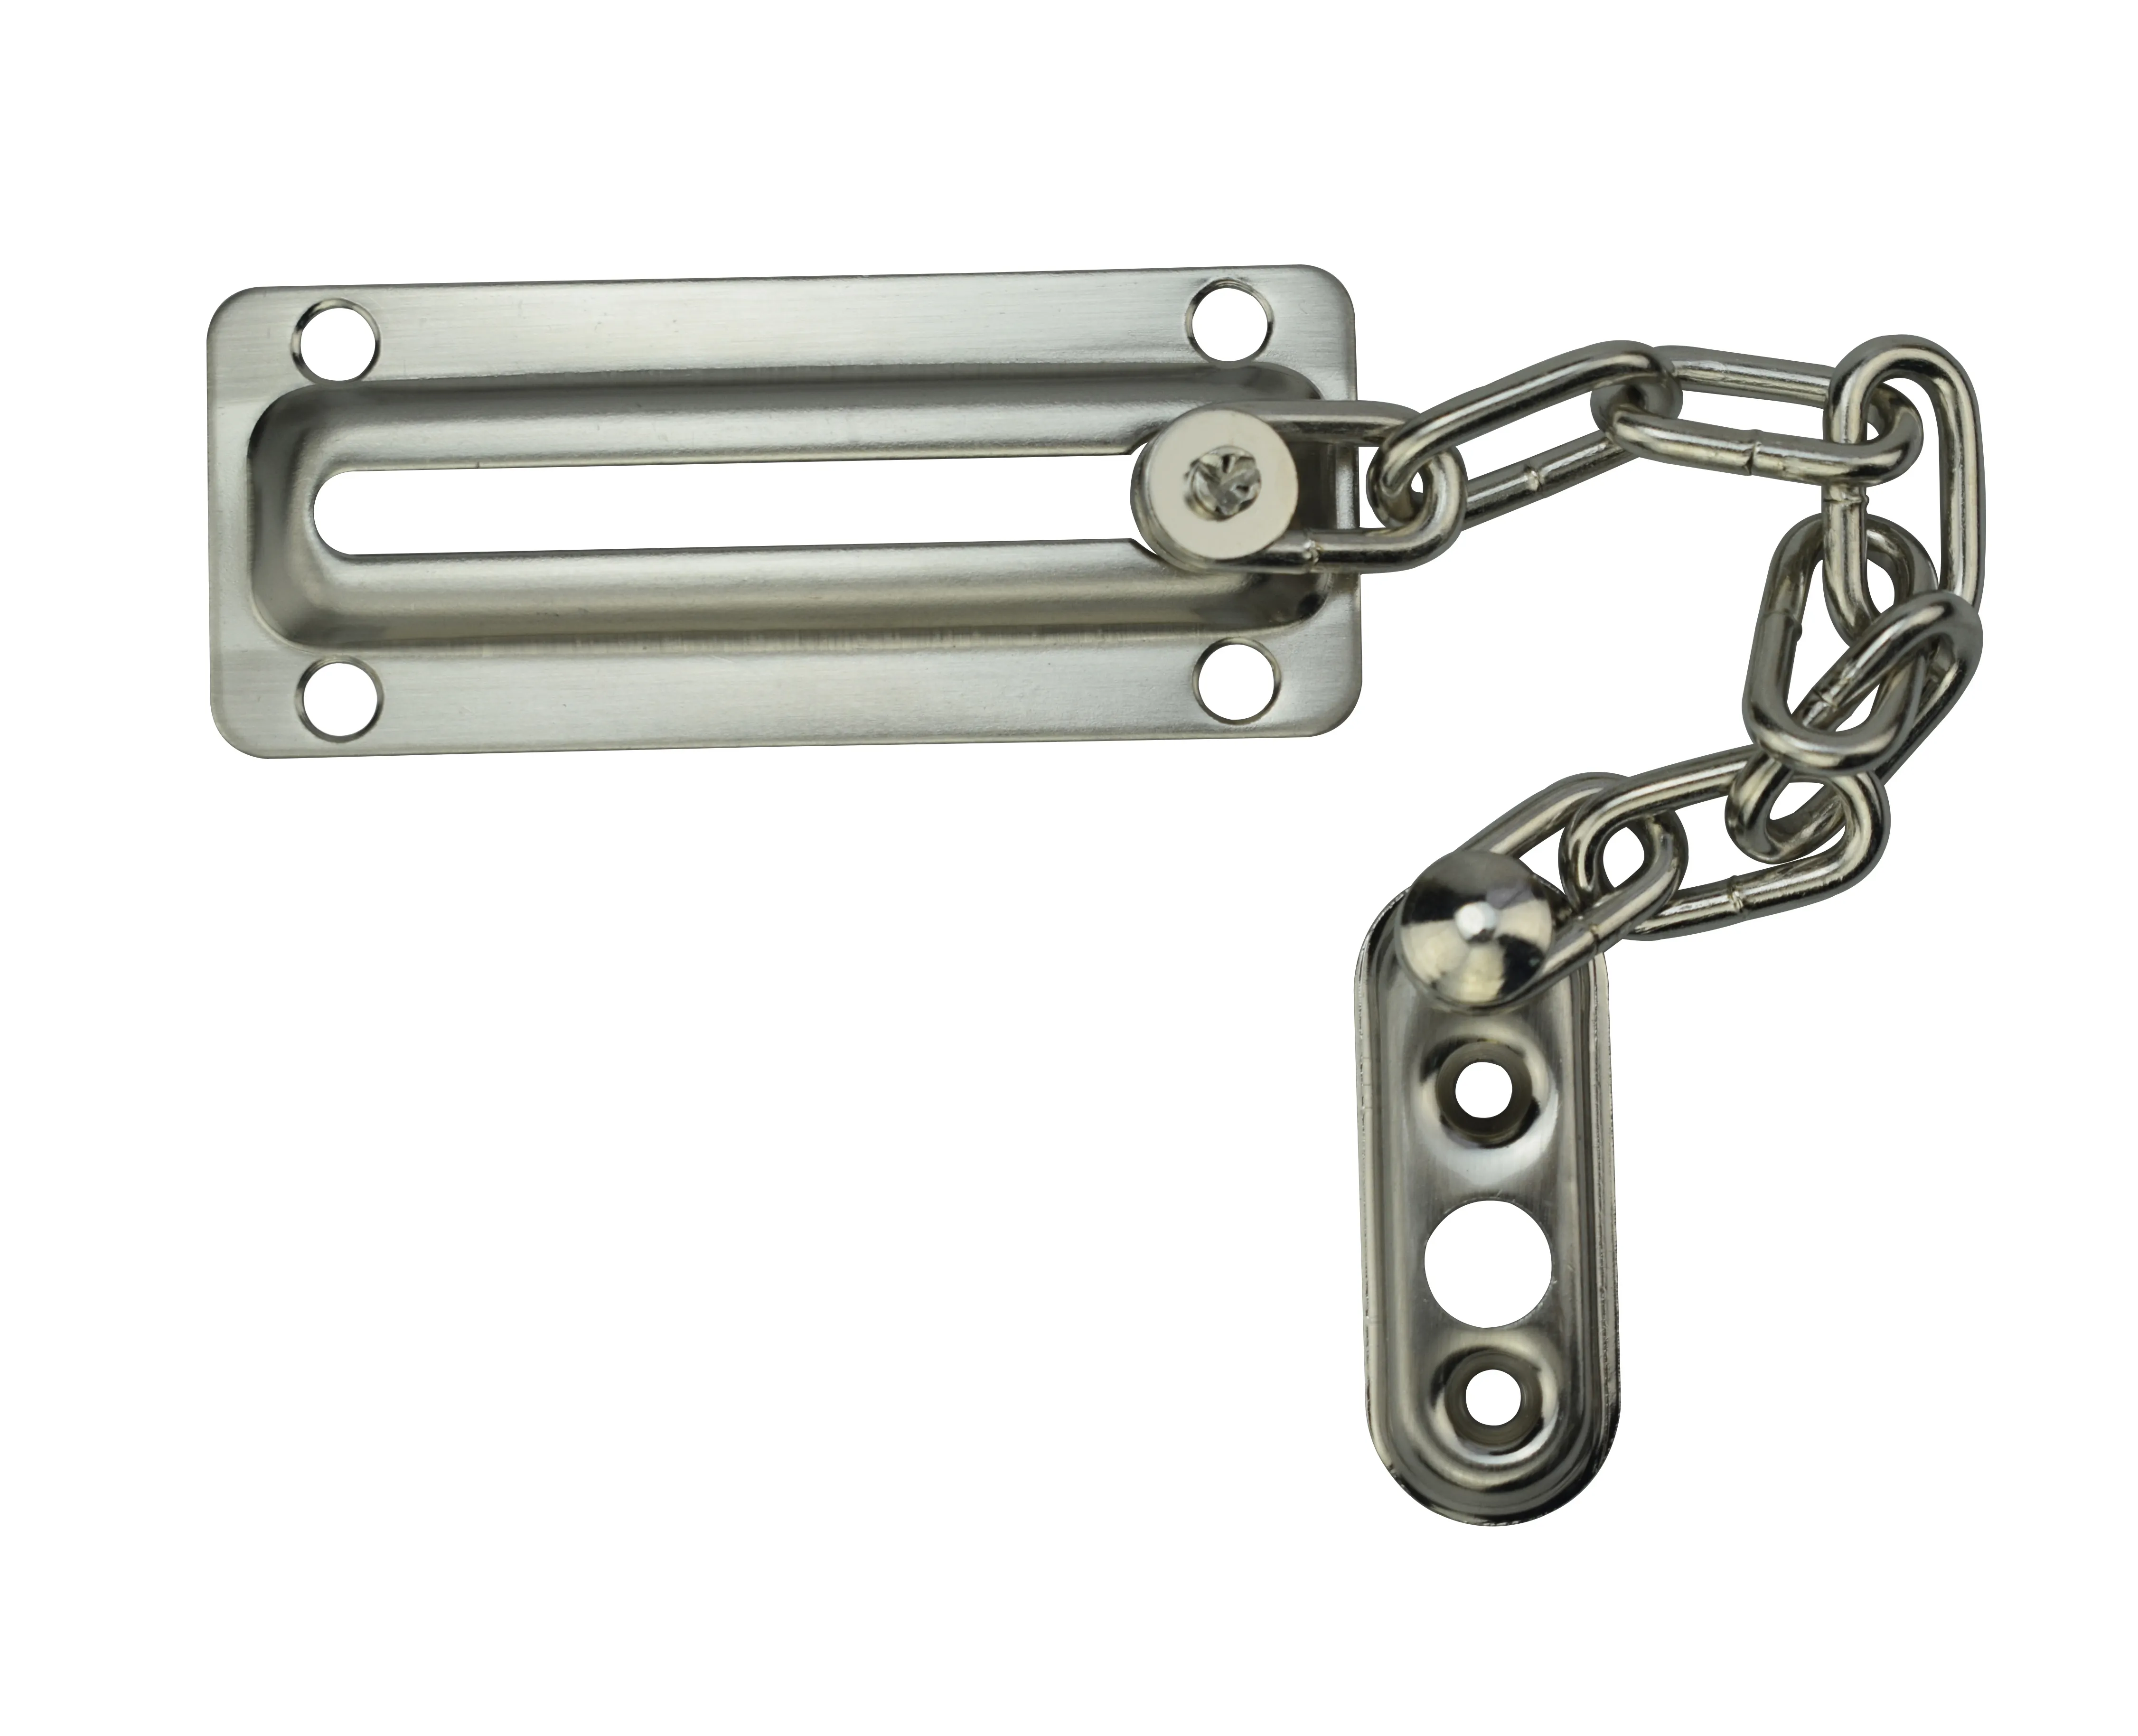 Demountable Stainless Steel Door Chain Lock Security Chain Guard Spring Anti Theft Press Lock Heavy Duty Door Latch With Screws